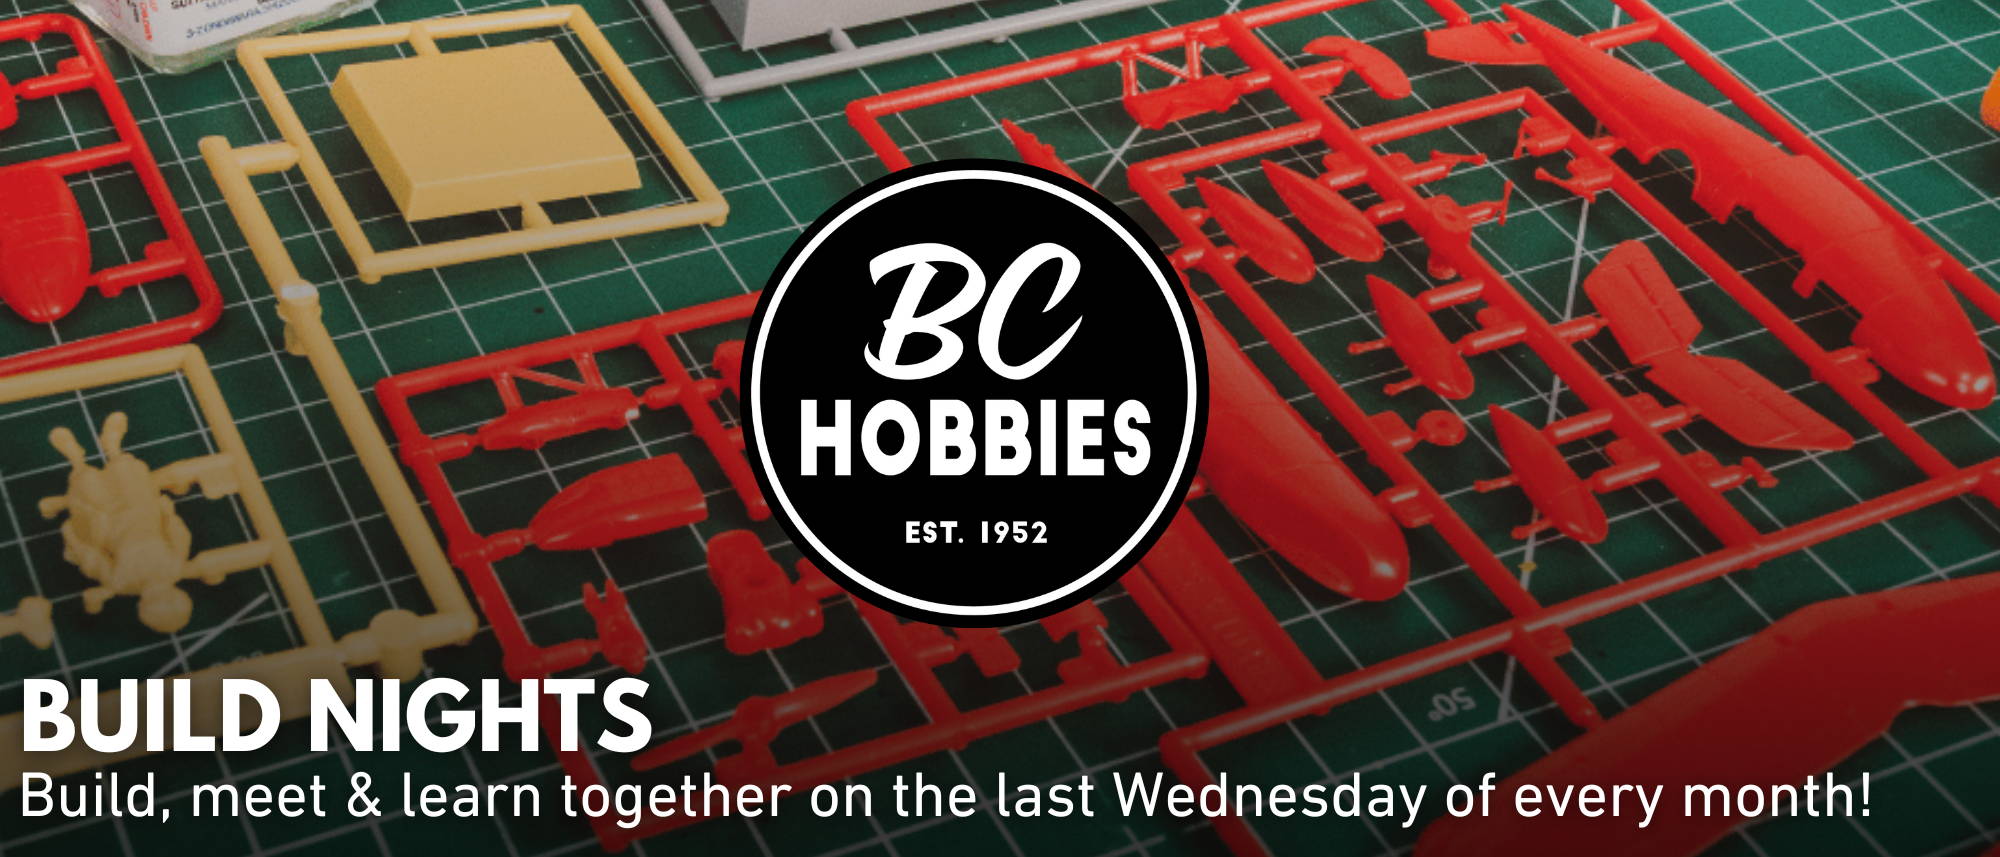 Build together at BC Hobbies Build Nights!